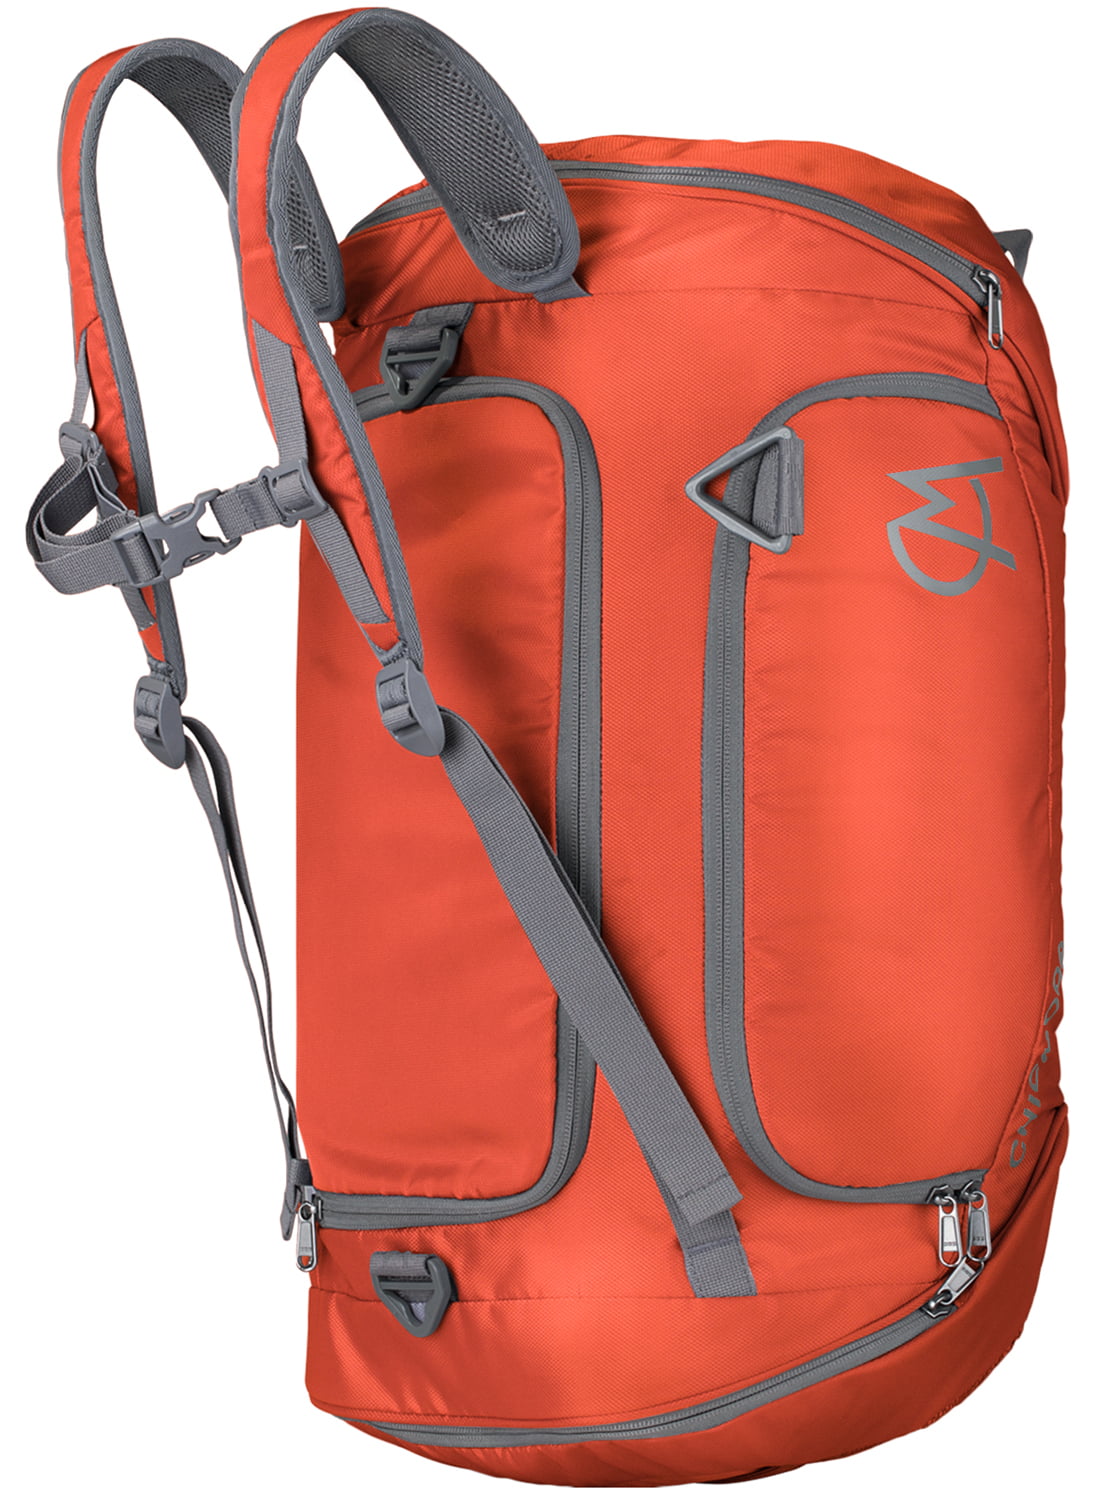 CHICMODA Gym Bag - Waterproof Travel Duffle Bag Workout Sport Shoulder ...